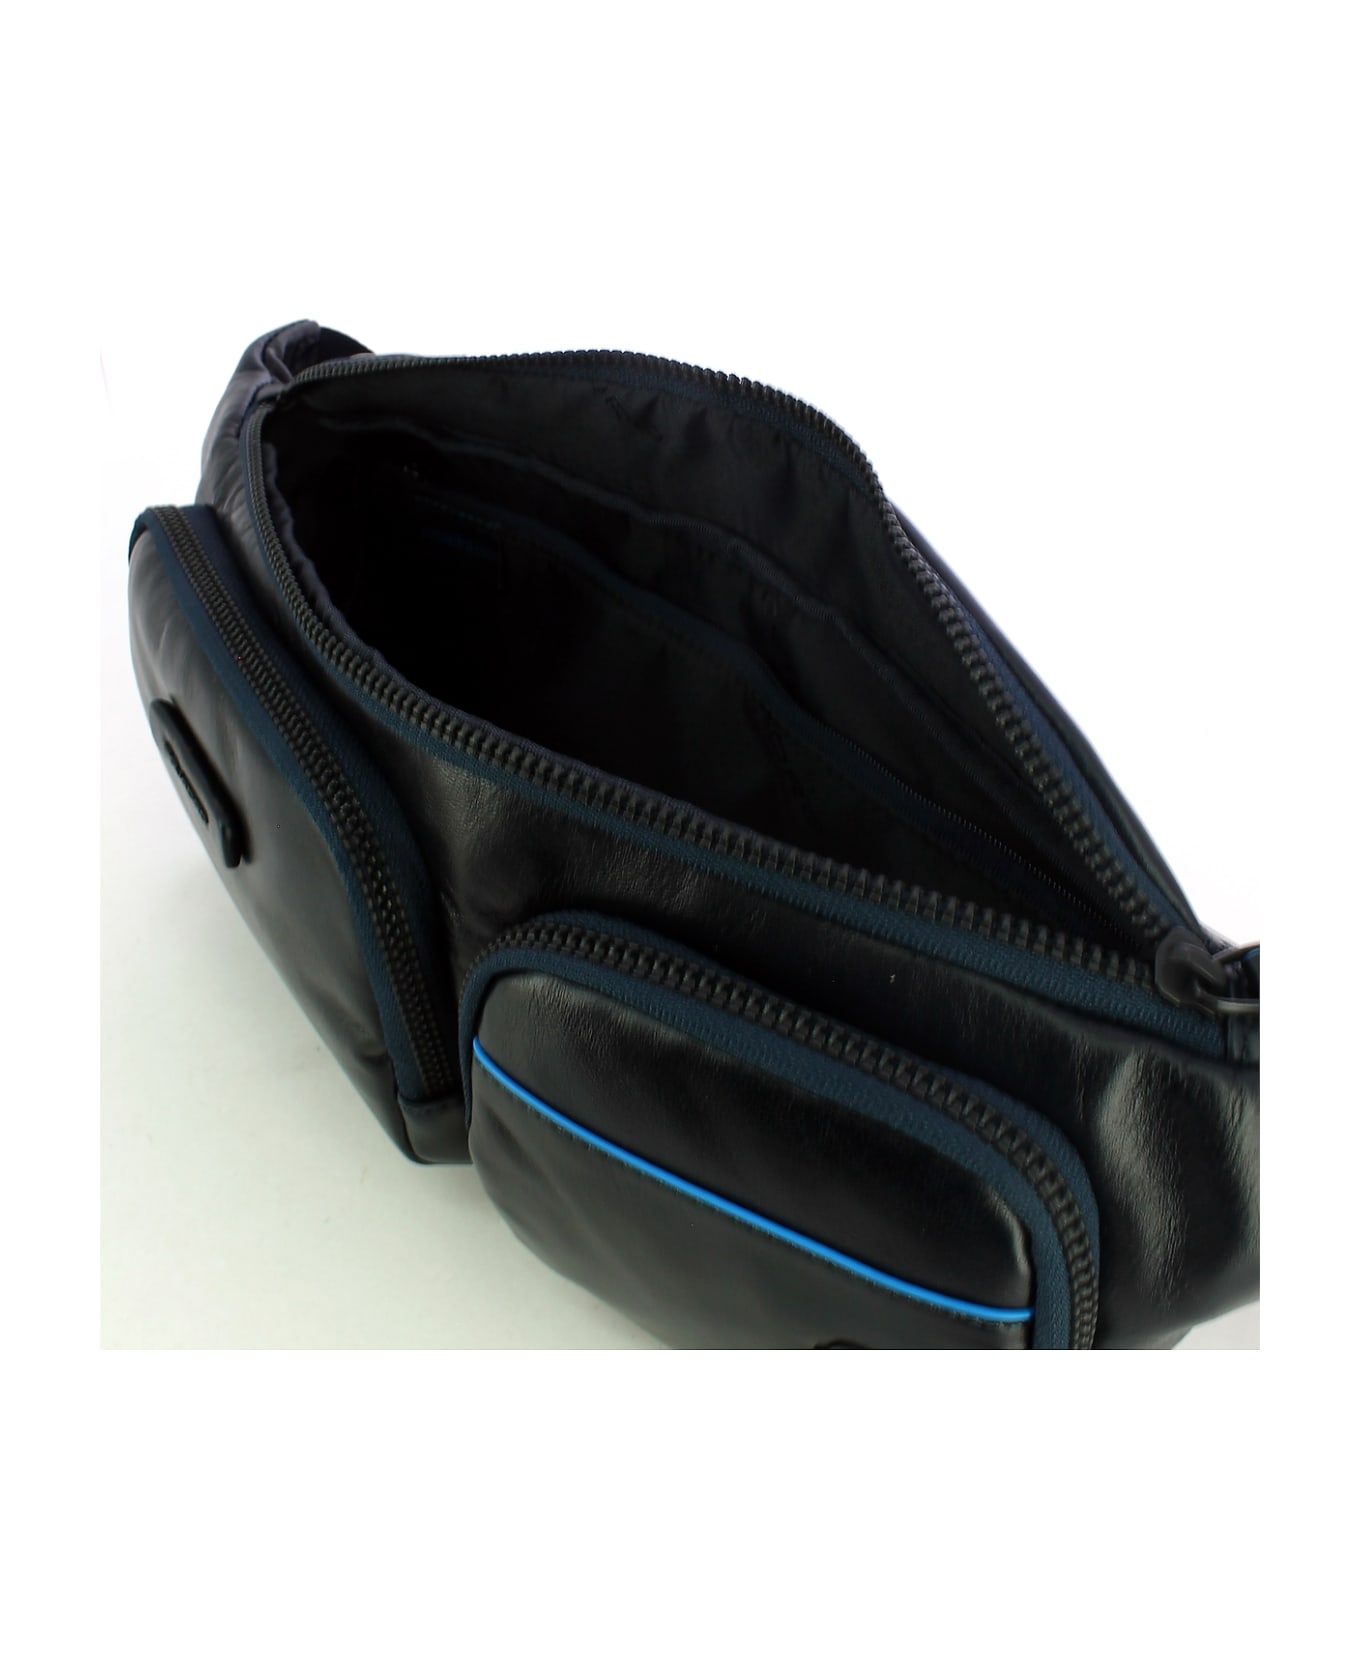 Piquadro Men's Belt Bag - Blue